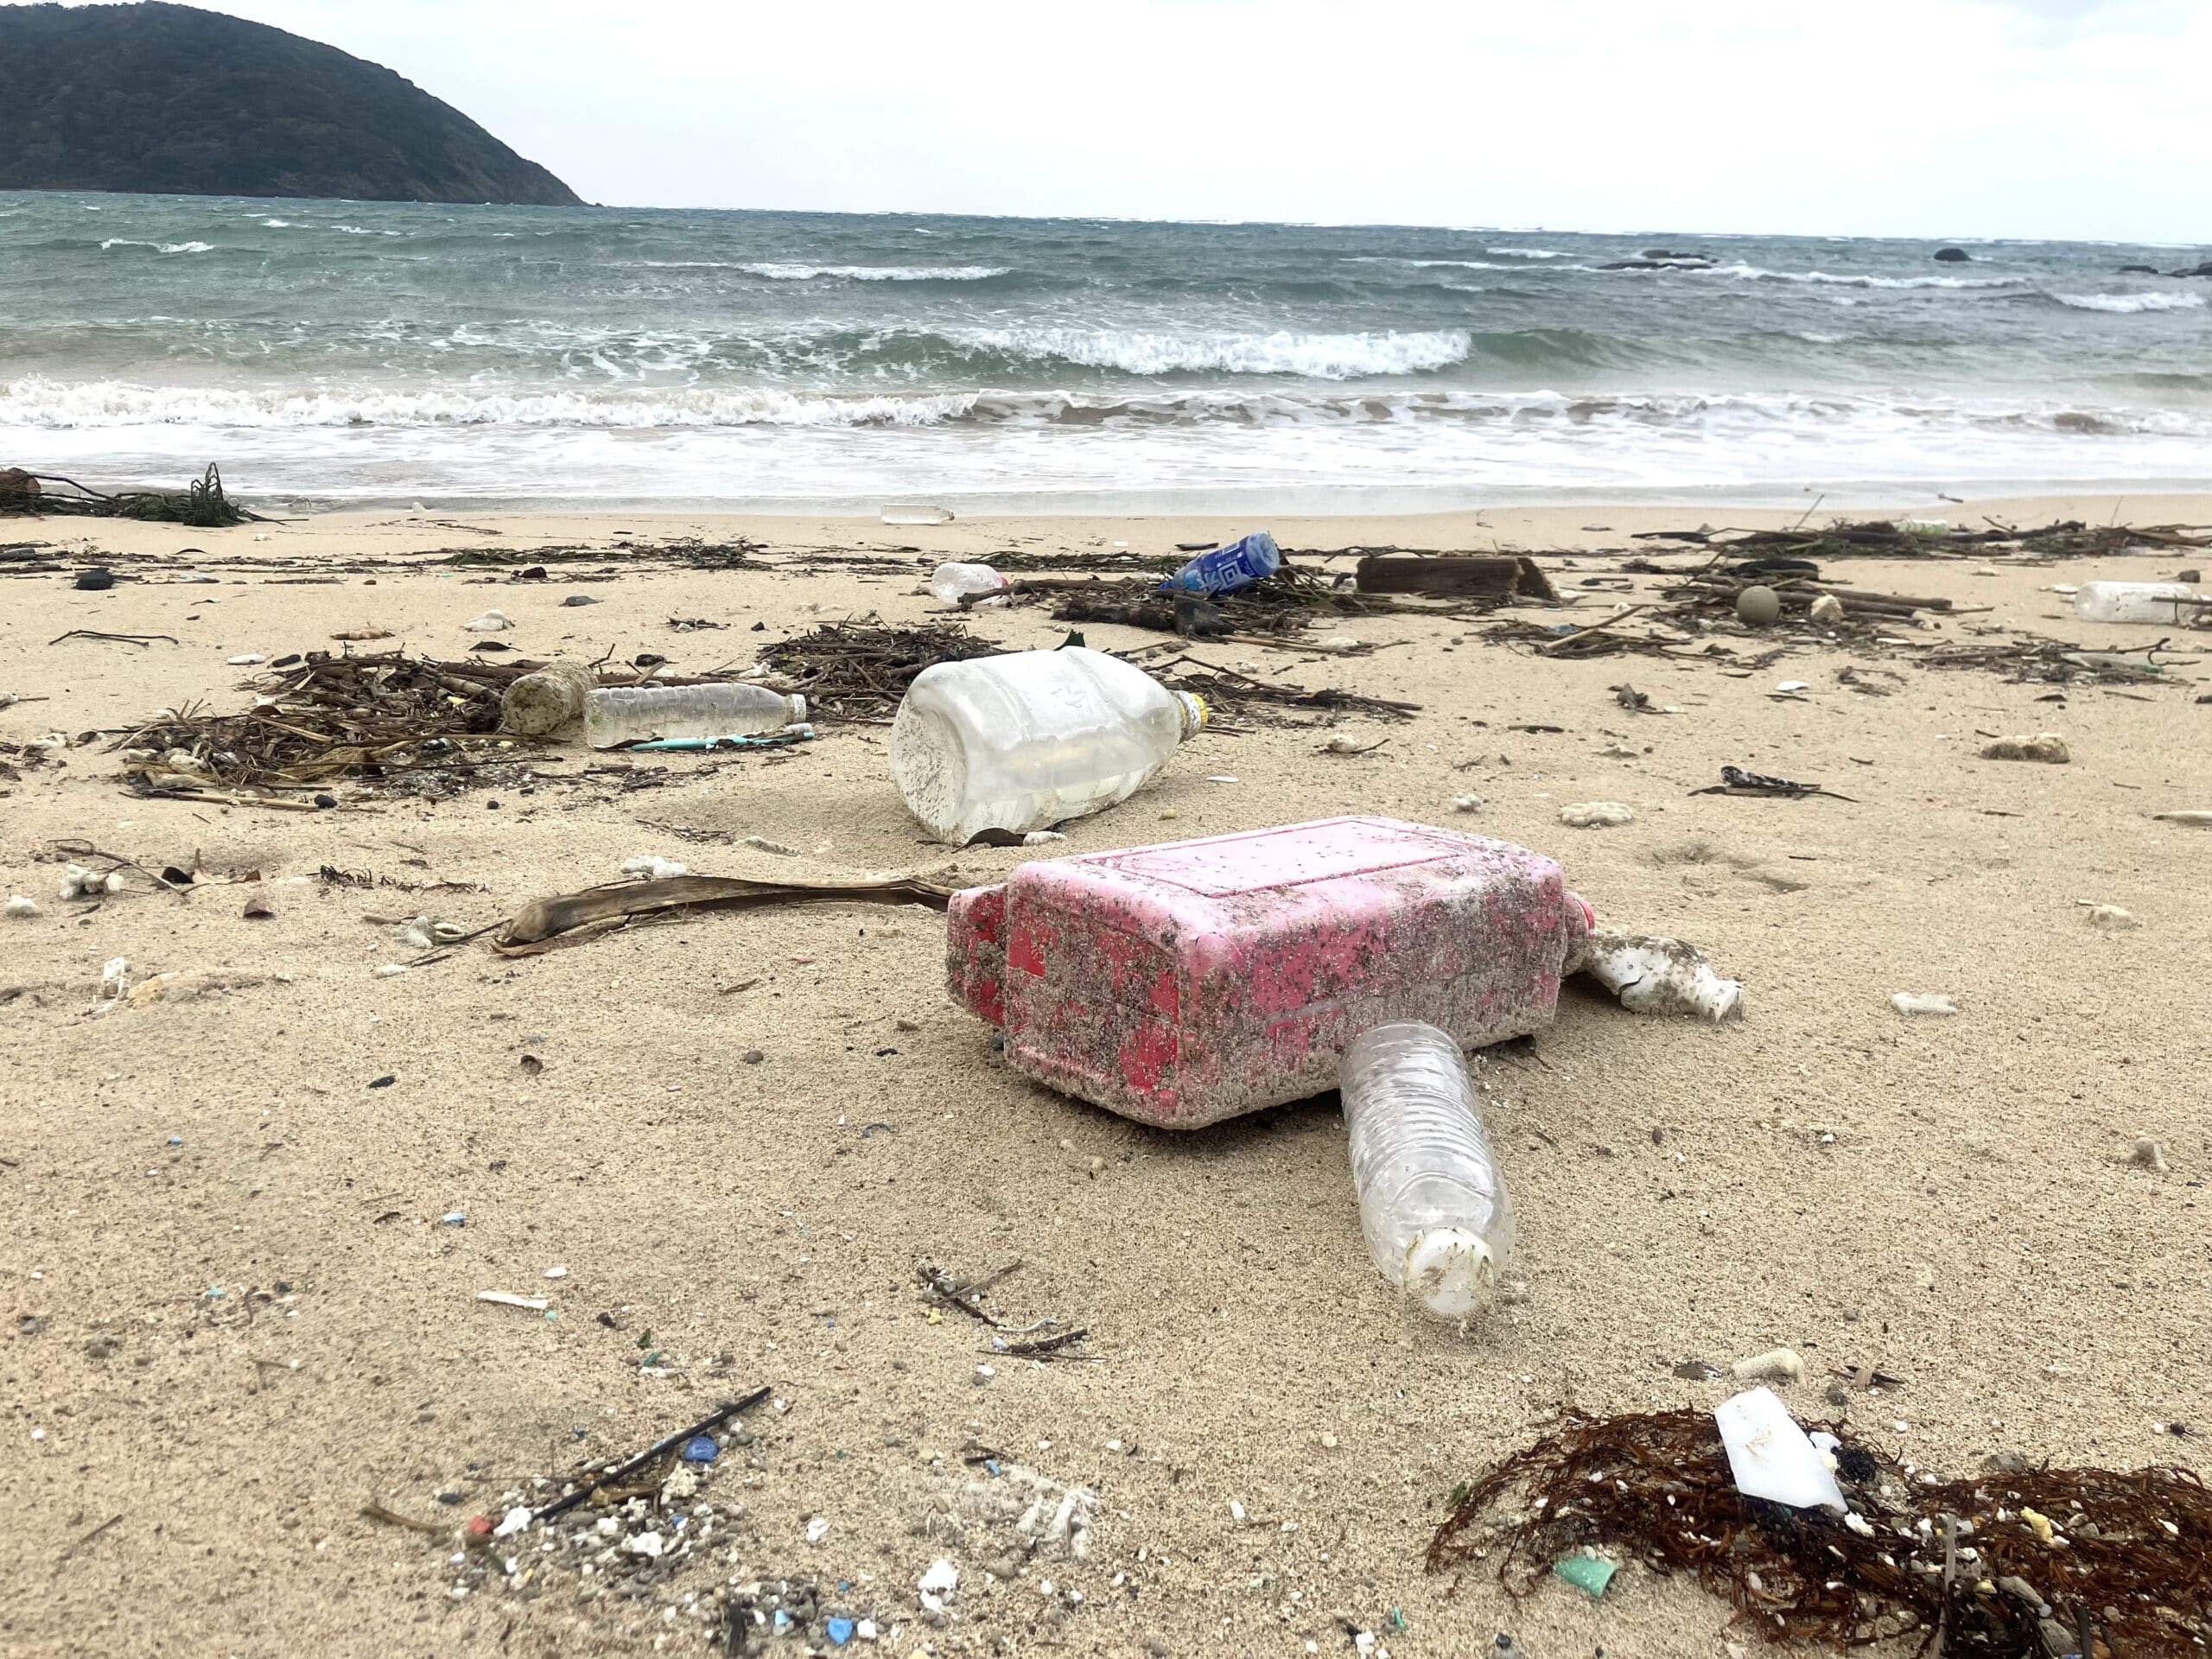 Winter brings a spread of debris along the coast of Amami Oshima.